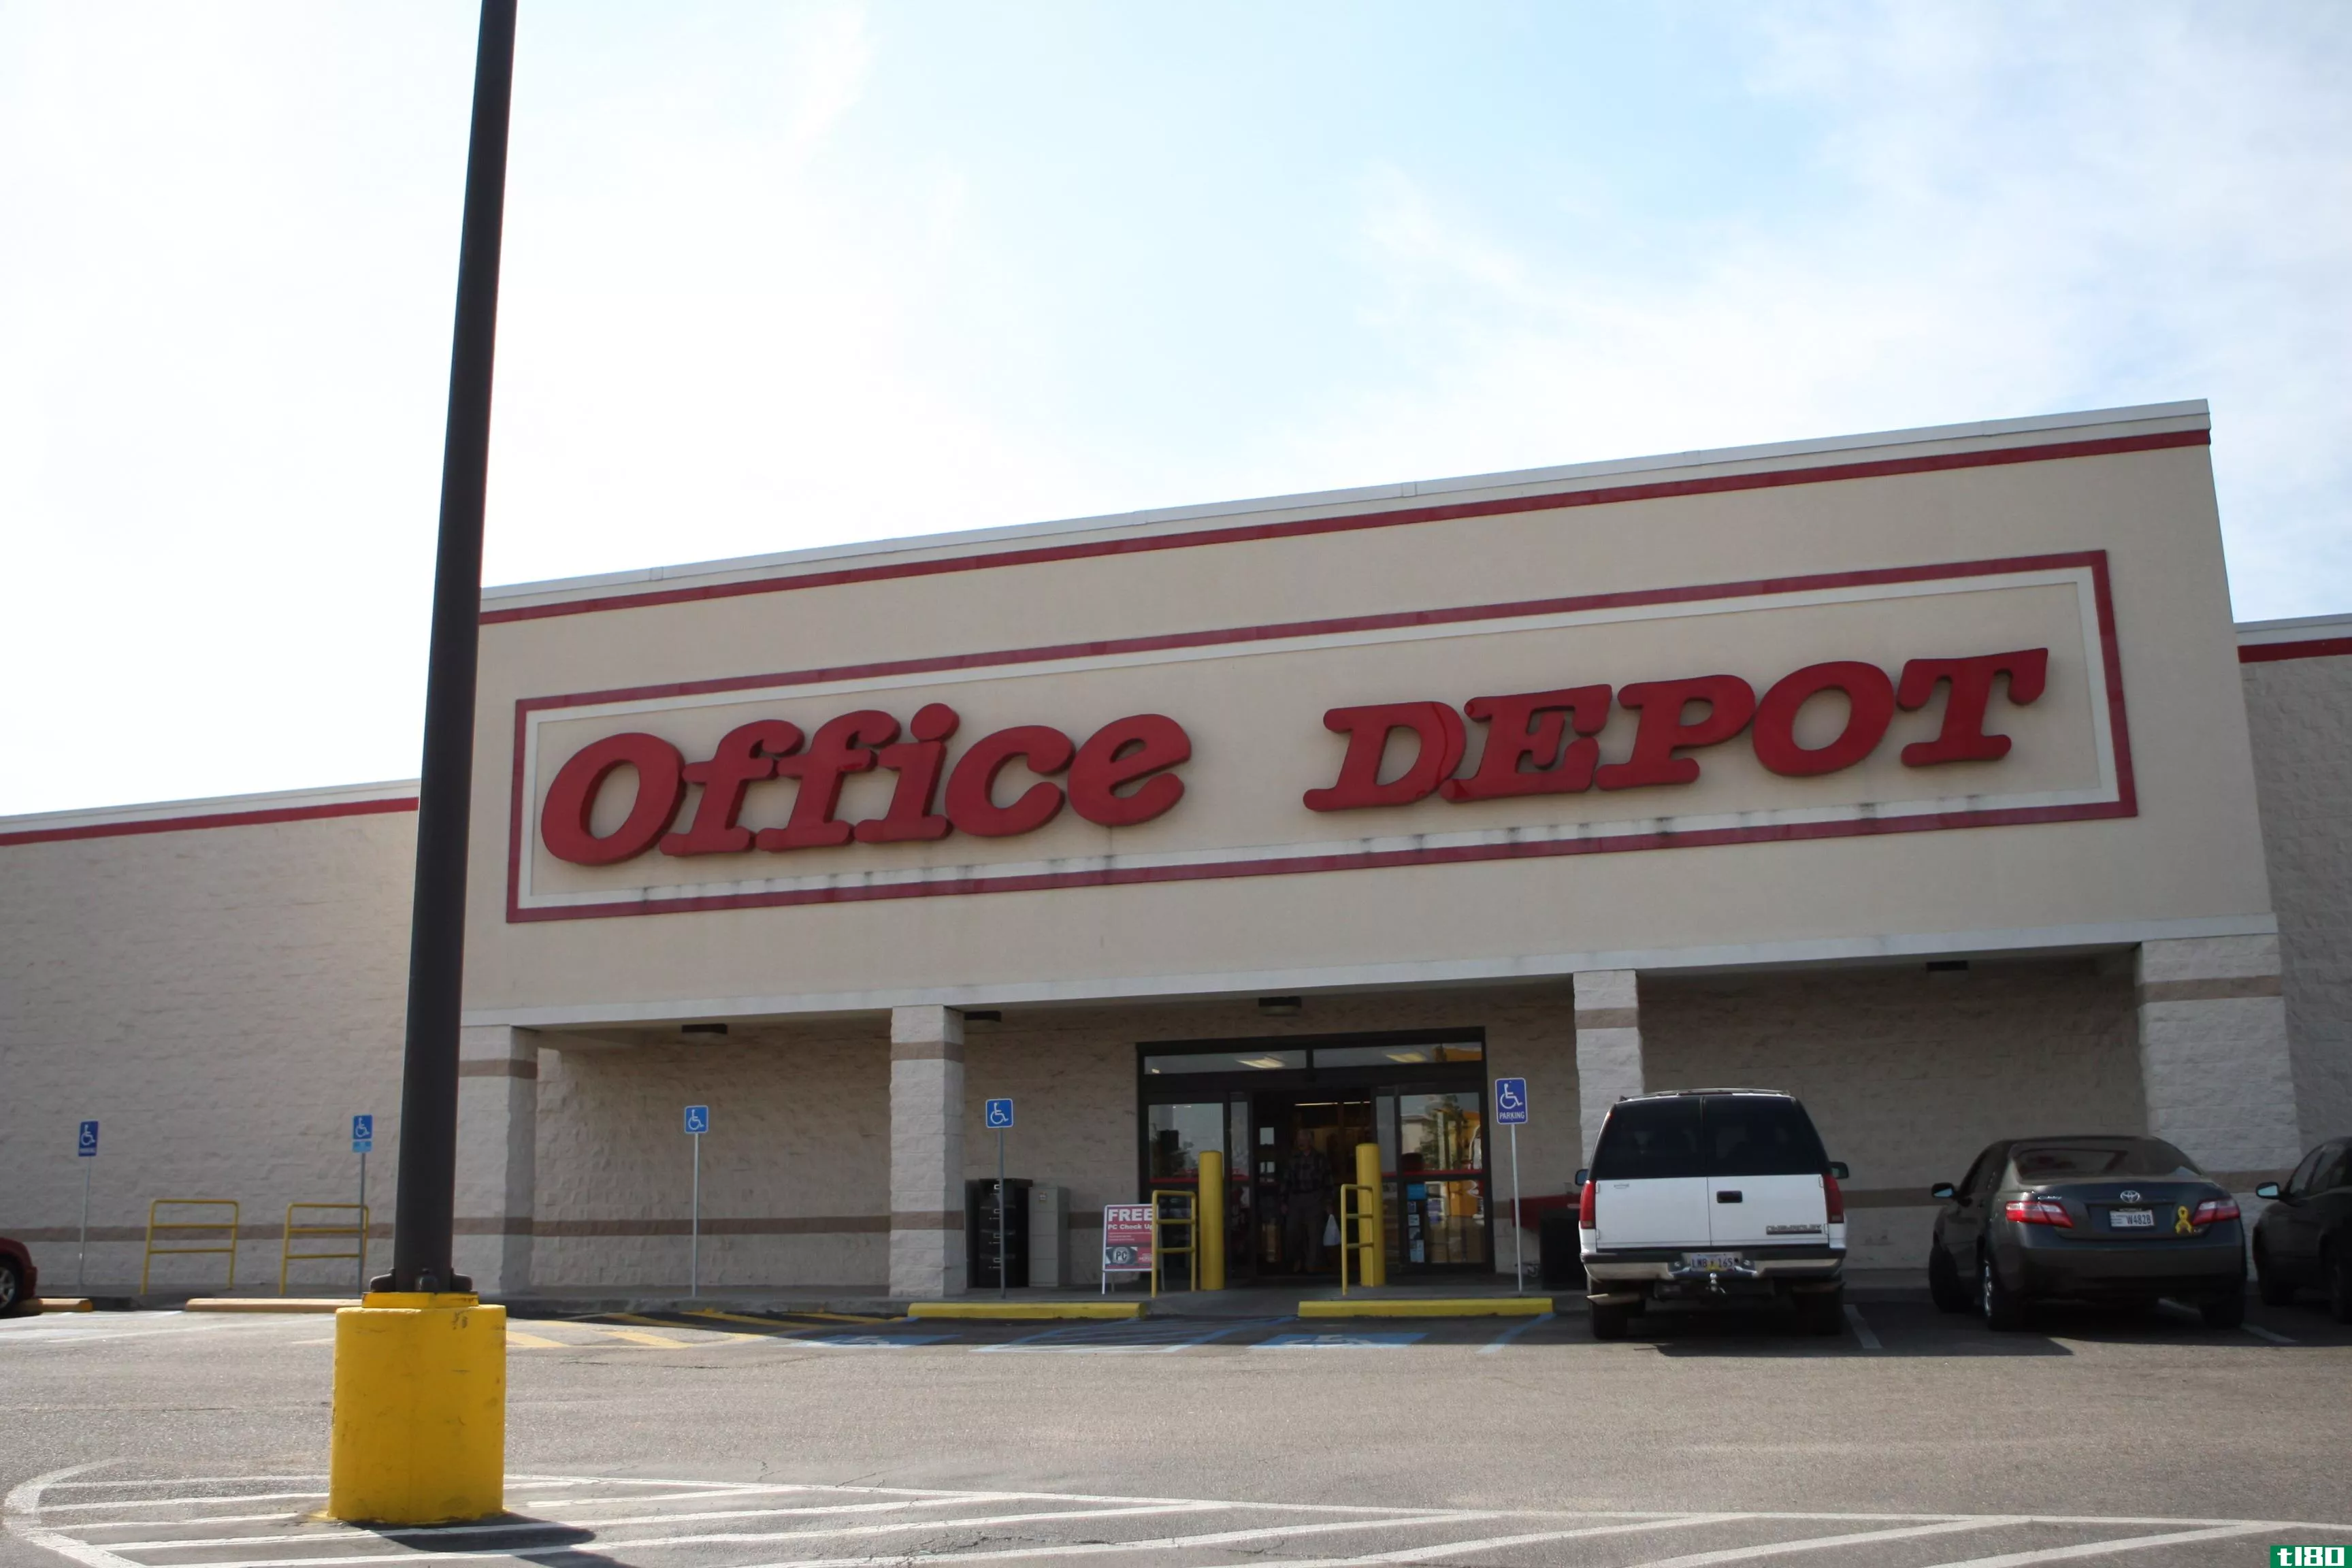 office depot的黑色星期五交易包括179.99美元的戴尔和159.99美元的东芝笔记本电脑